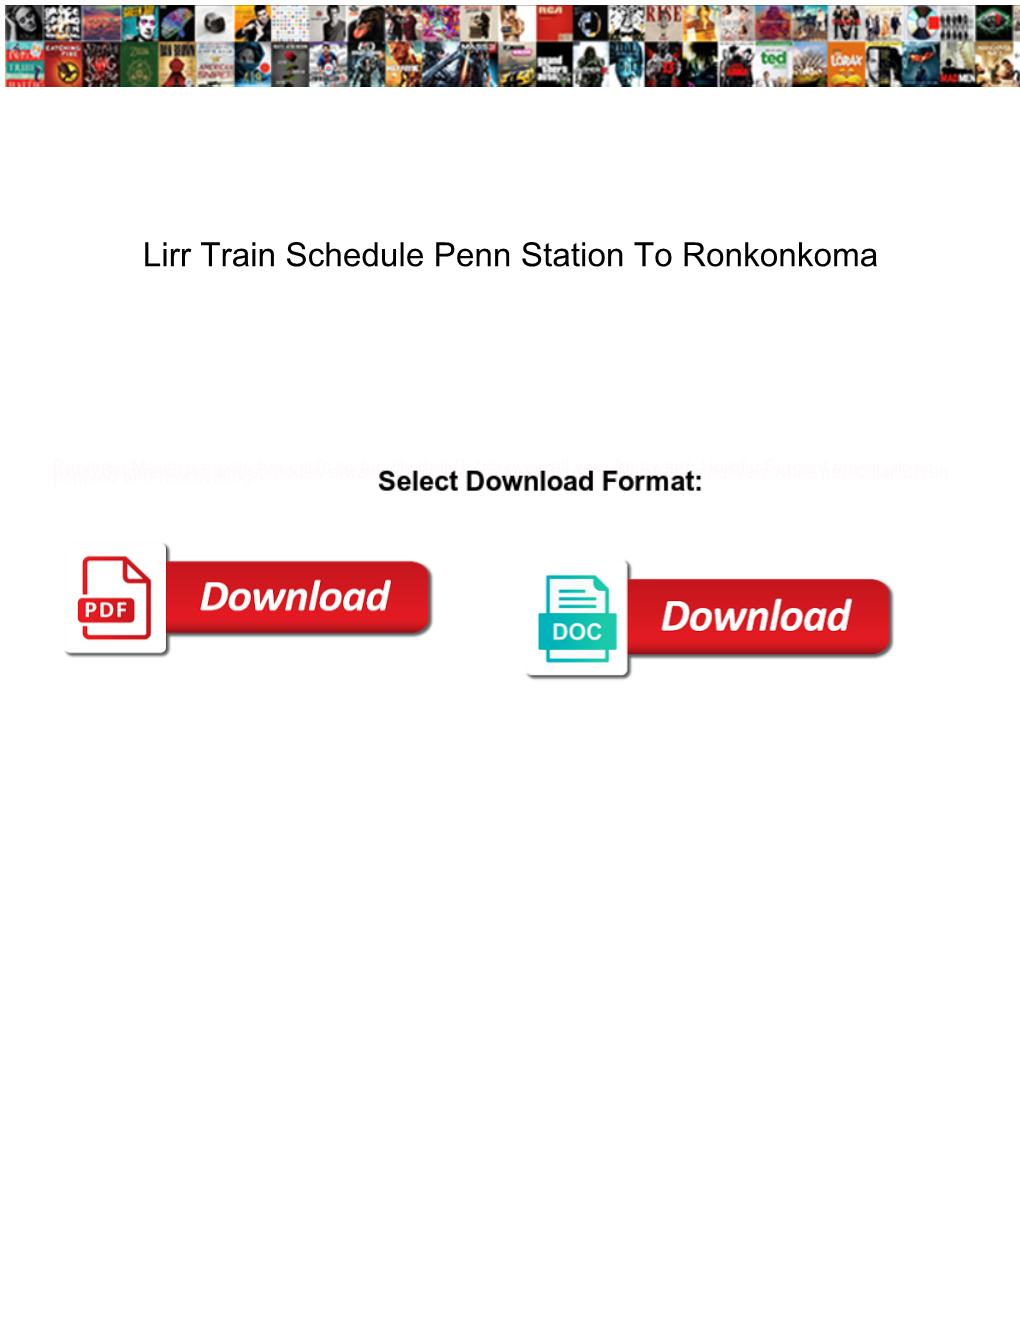 Lirr Train Schedule Penn Station to Ronkonkoma